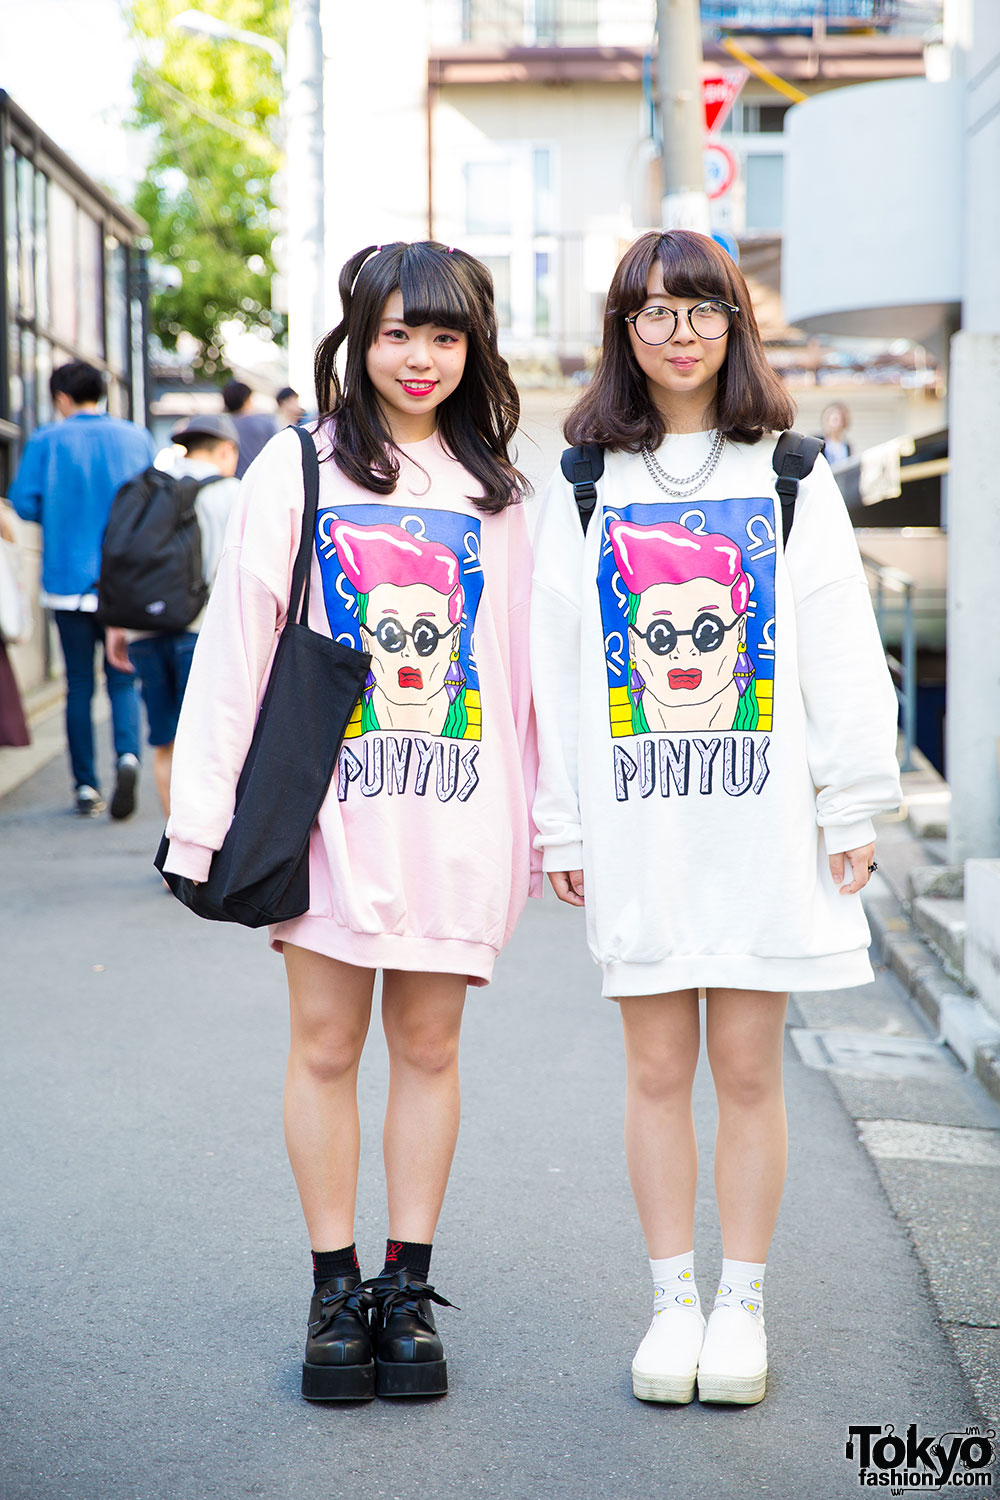 Harajuku Girls In Punyus Sweatshirts W Wc Wego And Platforms Tokyo Fashion